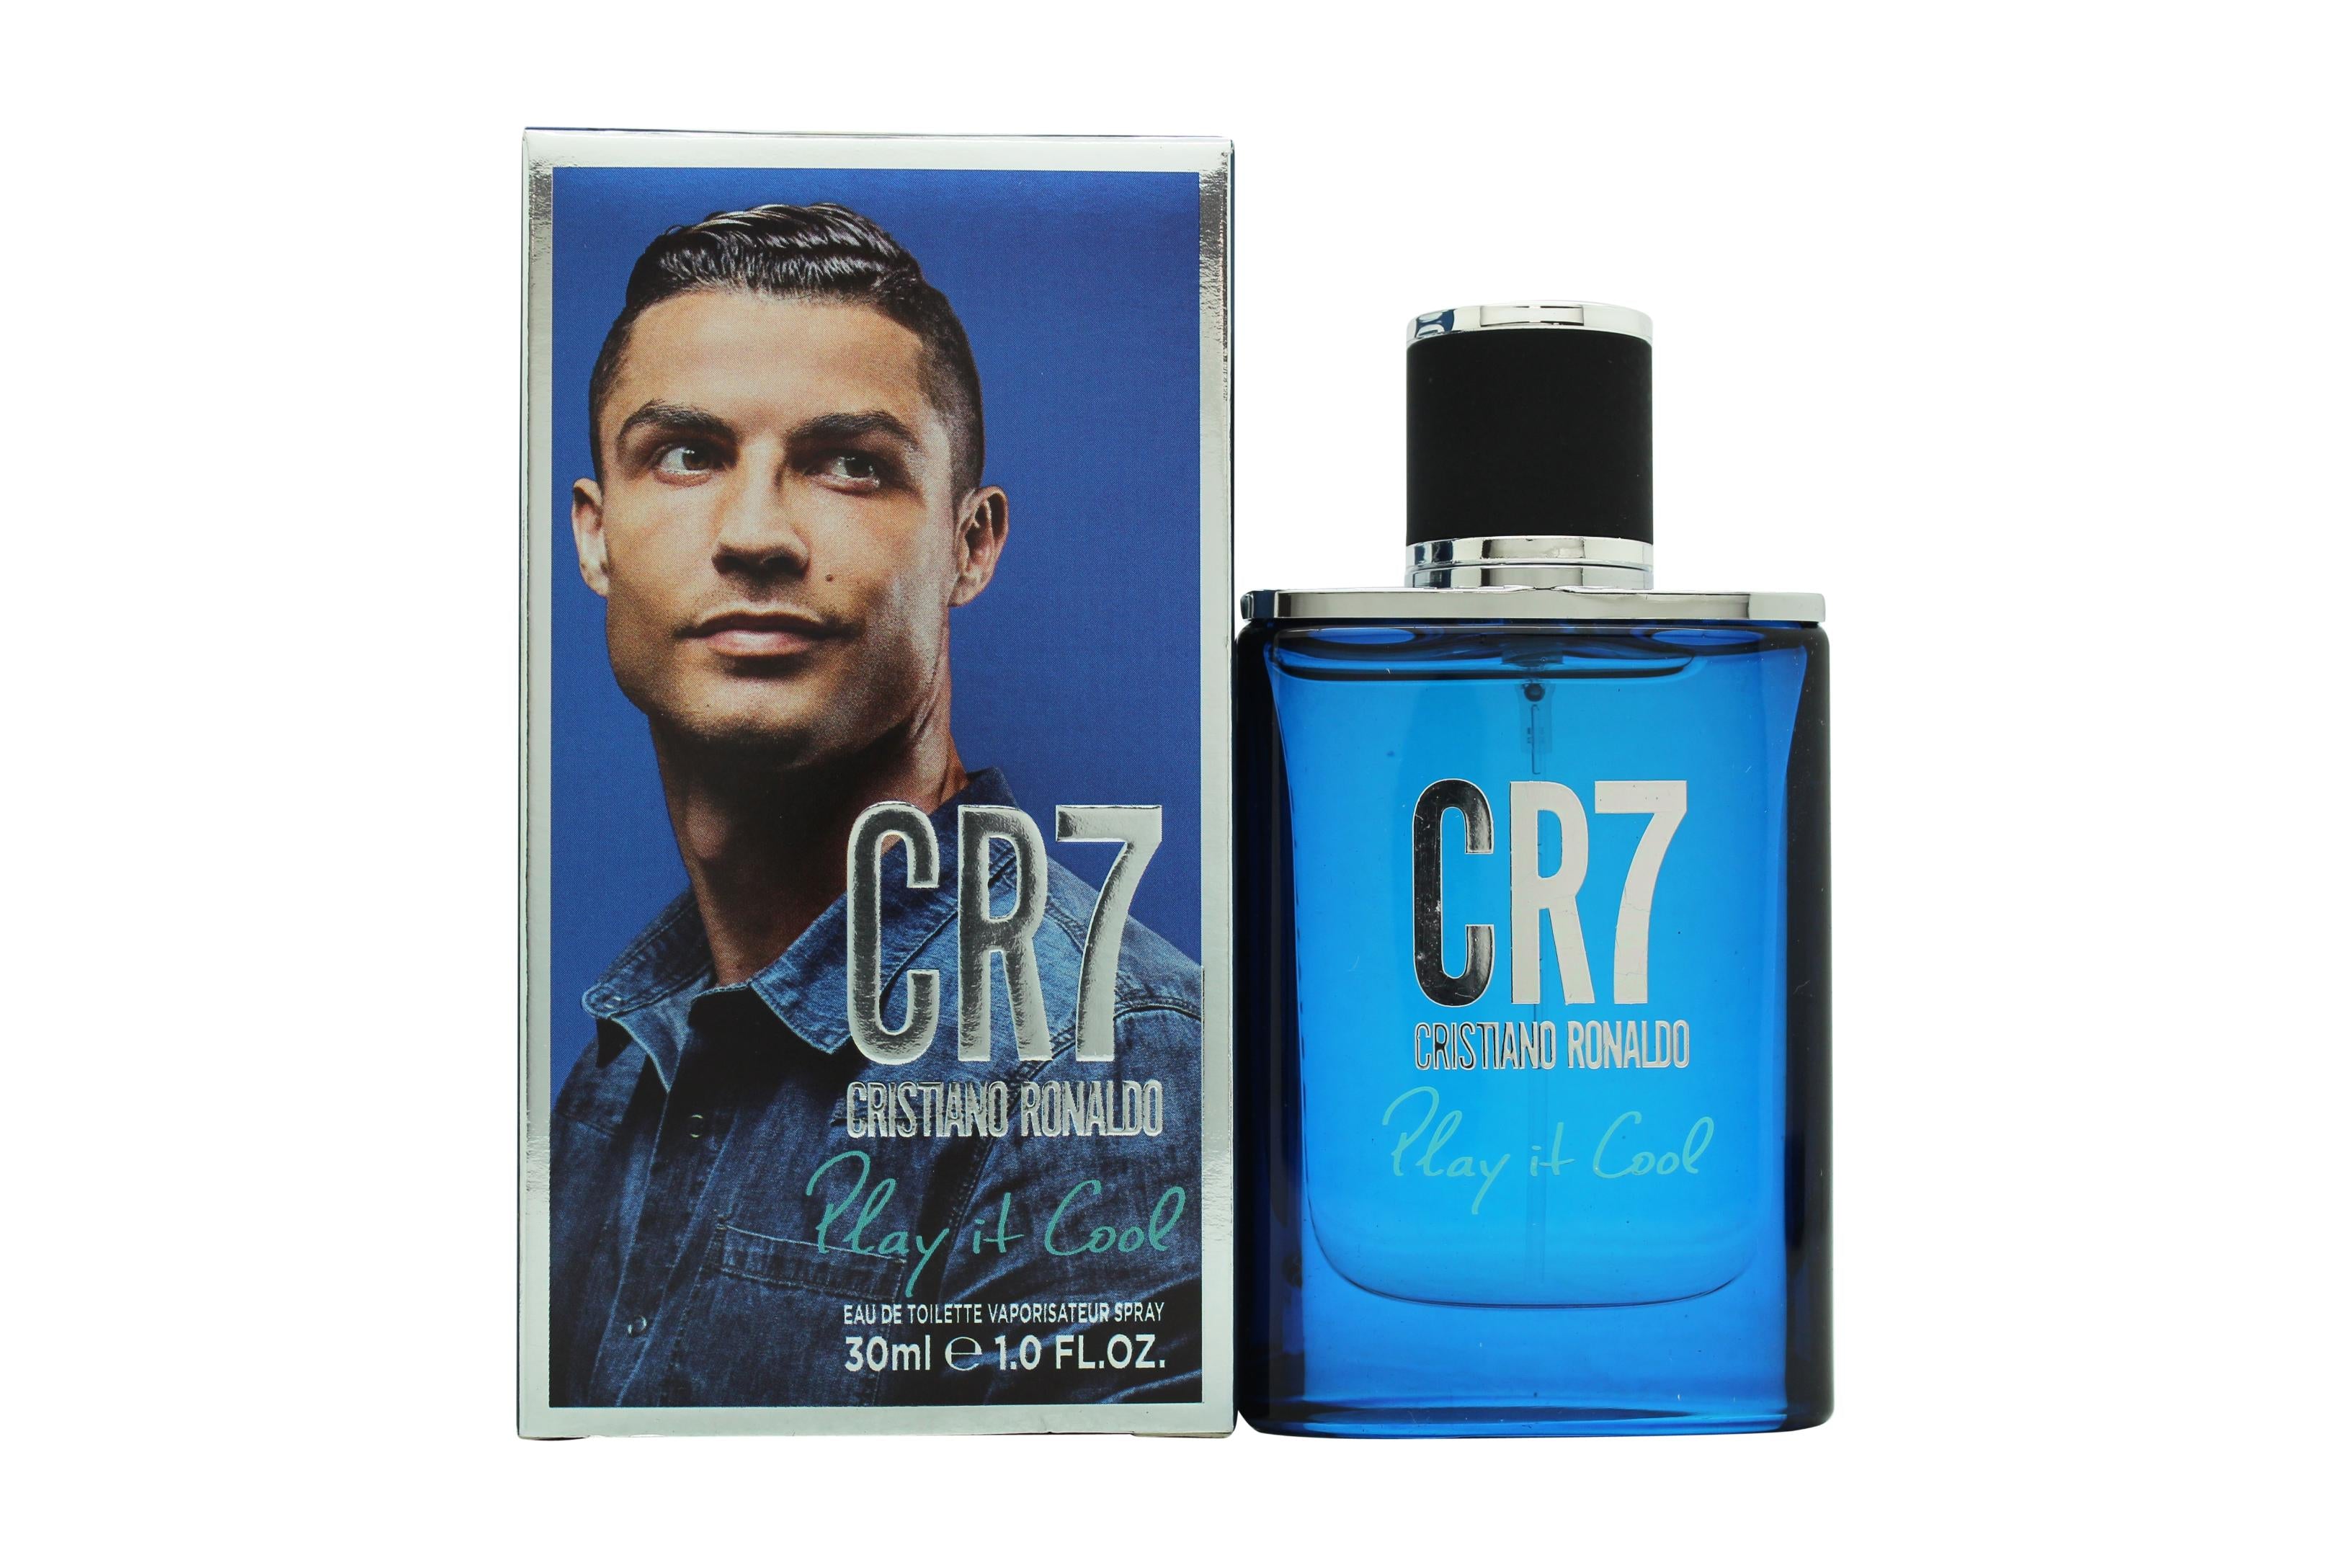 View Cristiano Ronaldo CR7 Play It Cool Eau de Toilette 30ml Spray information